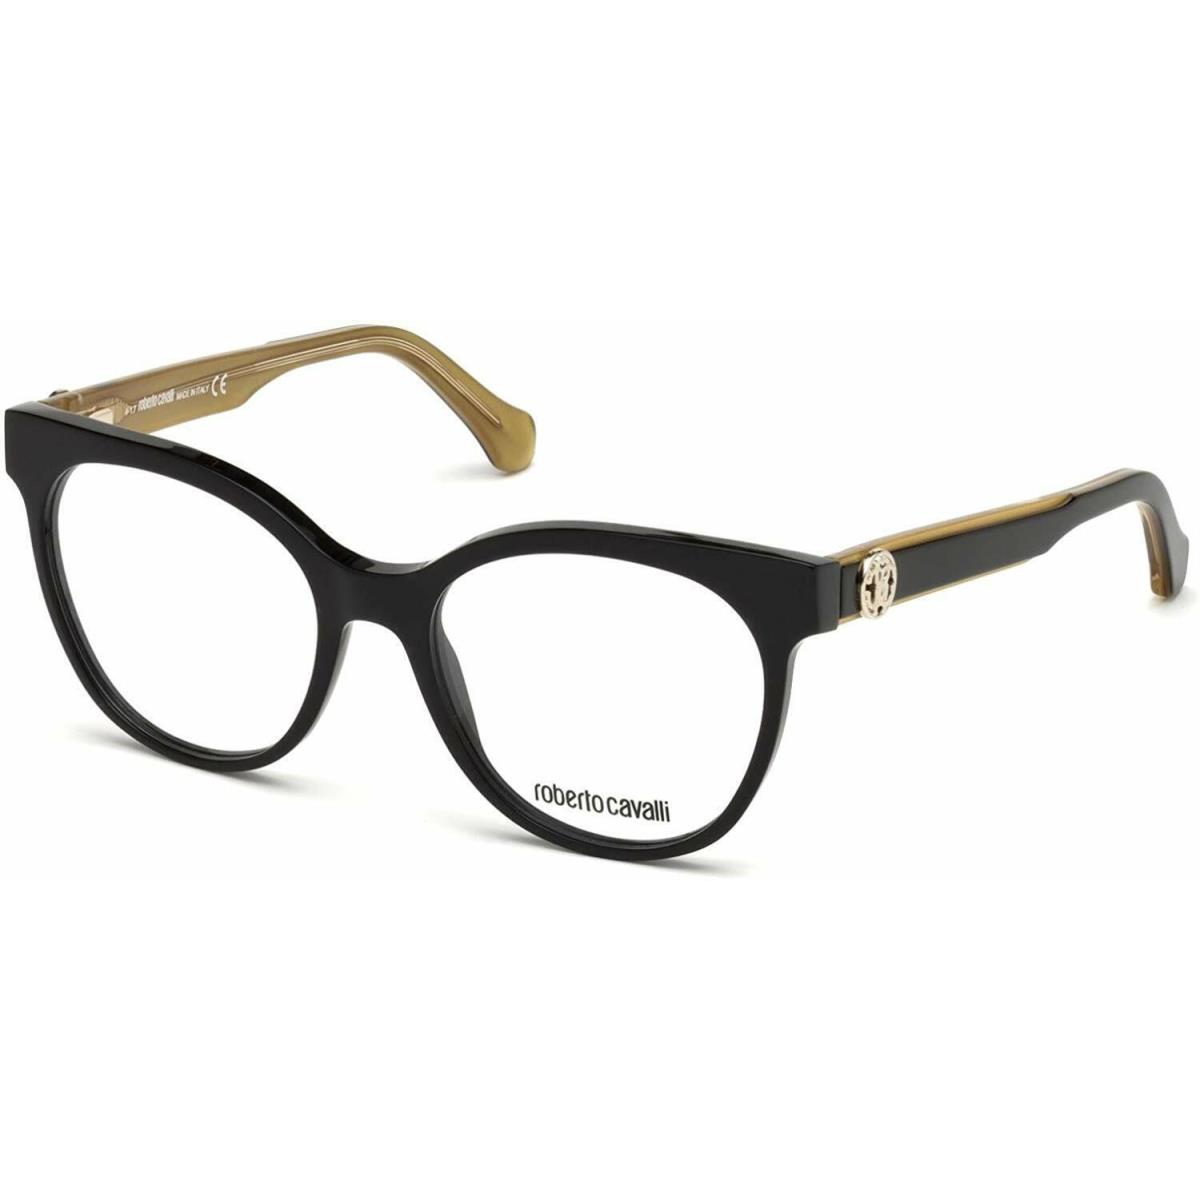 Roberto Cavalli Firenzuola RC5049 005 Black Plastic Eyeglasses Frame 52-17-140